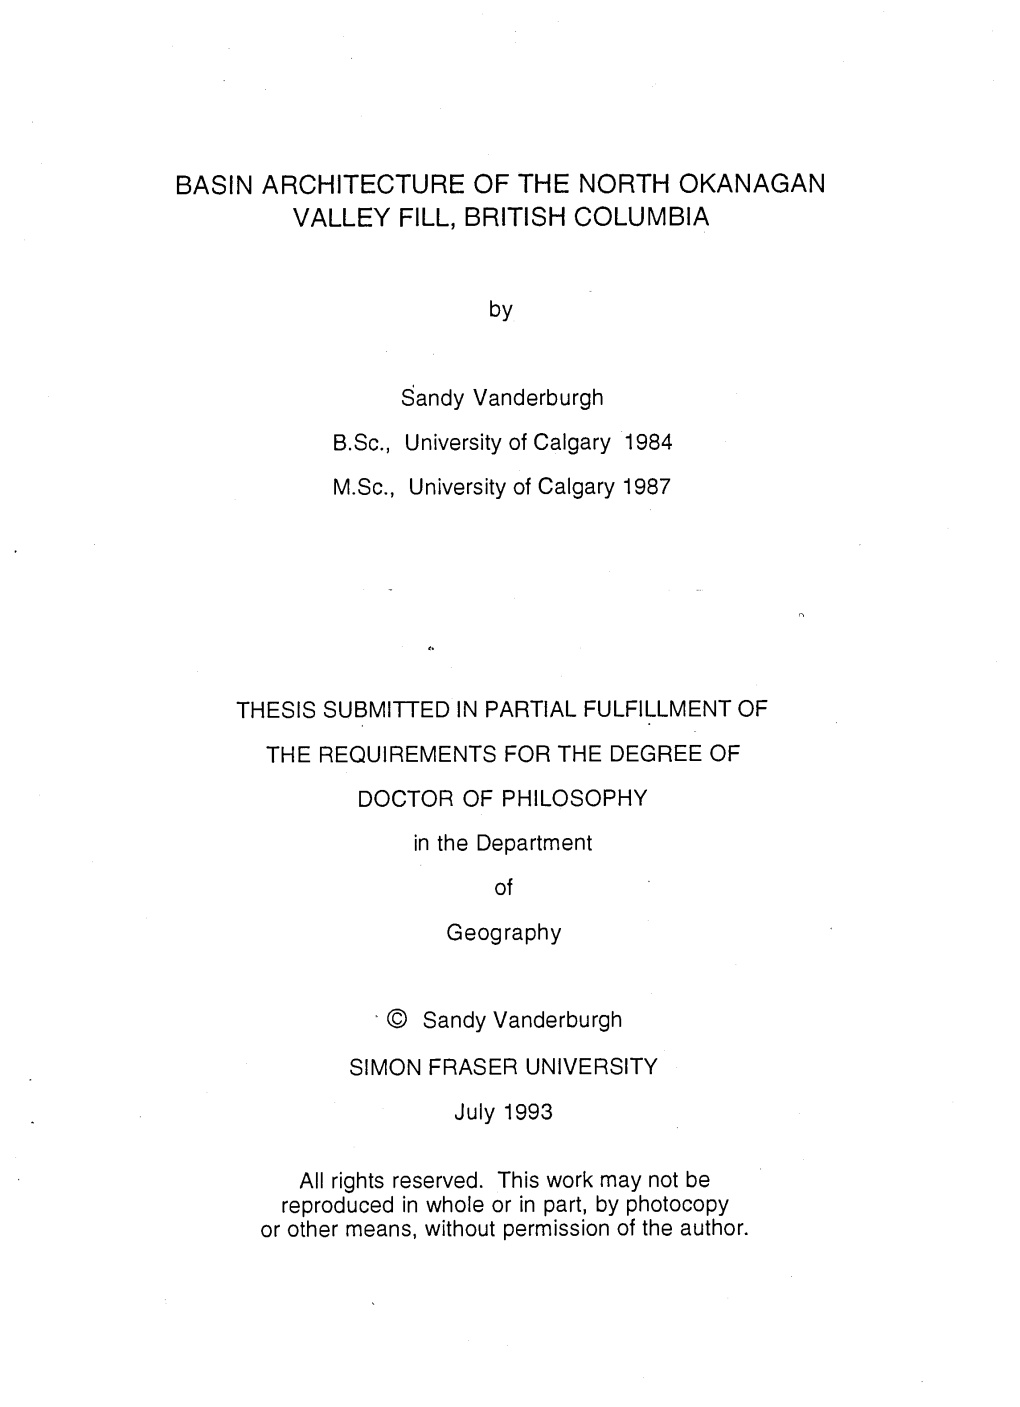 Basin Architecture of the North Okanagan Valley Fill, British Columbia